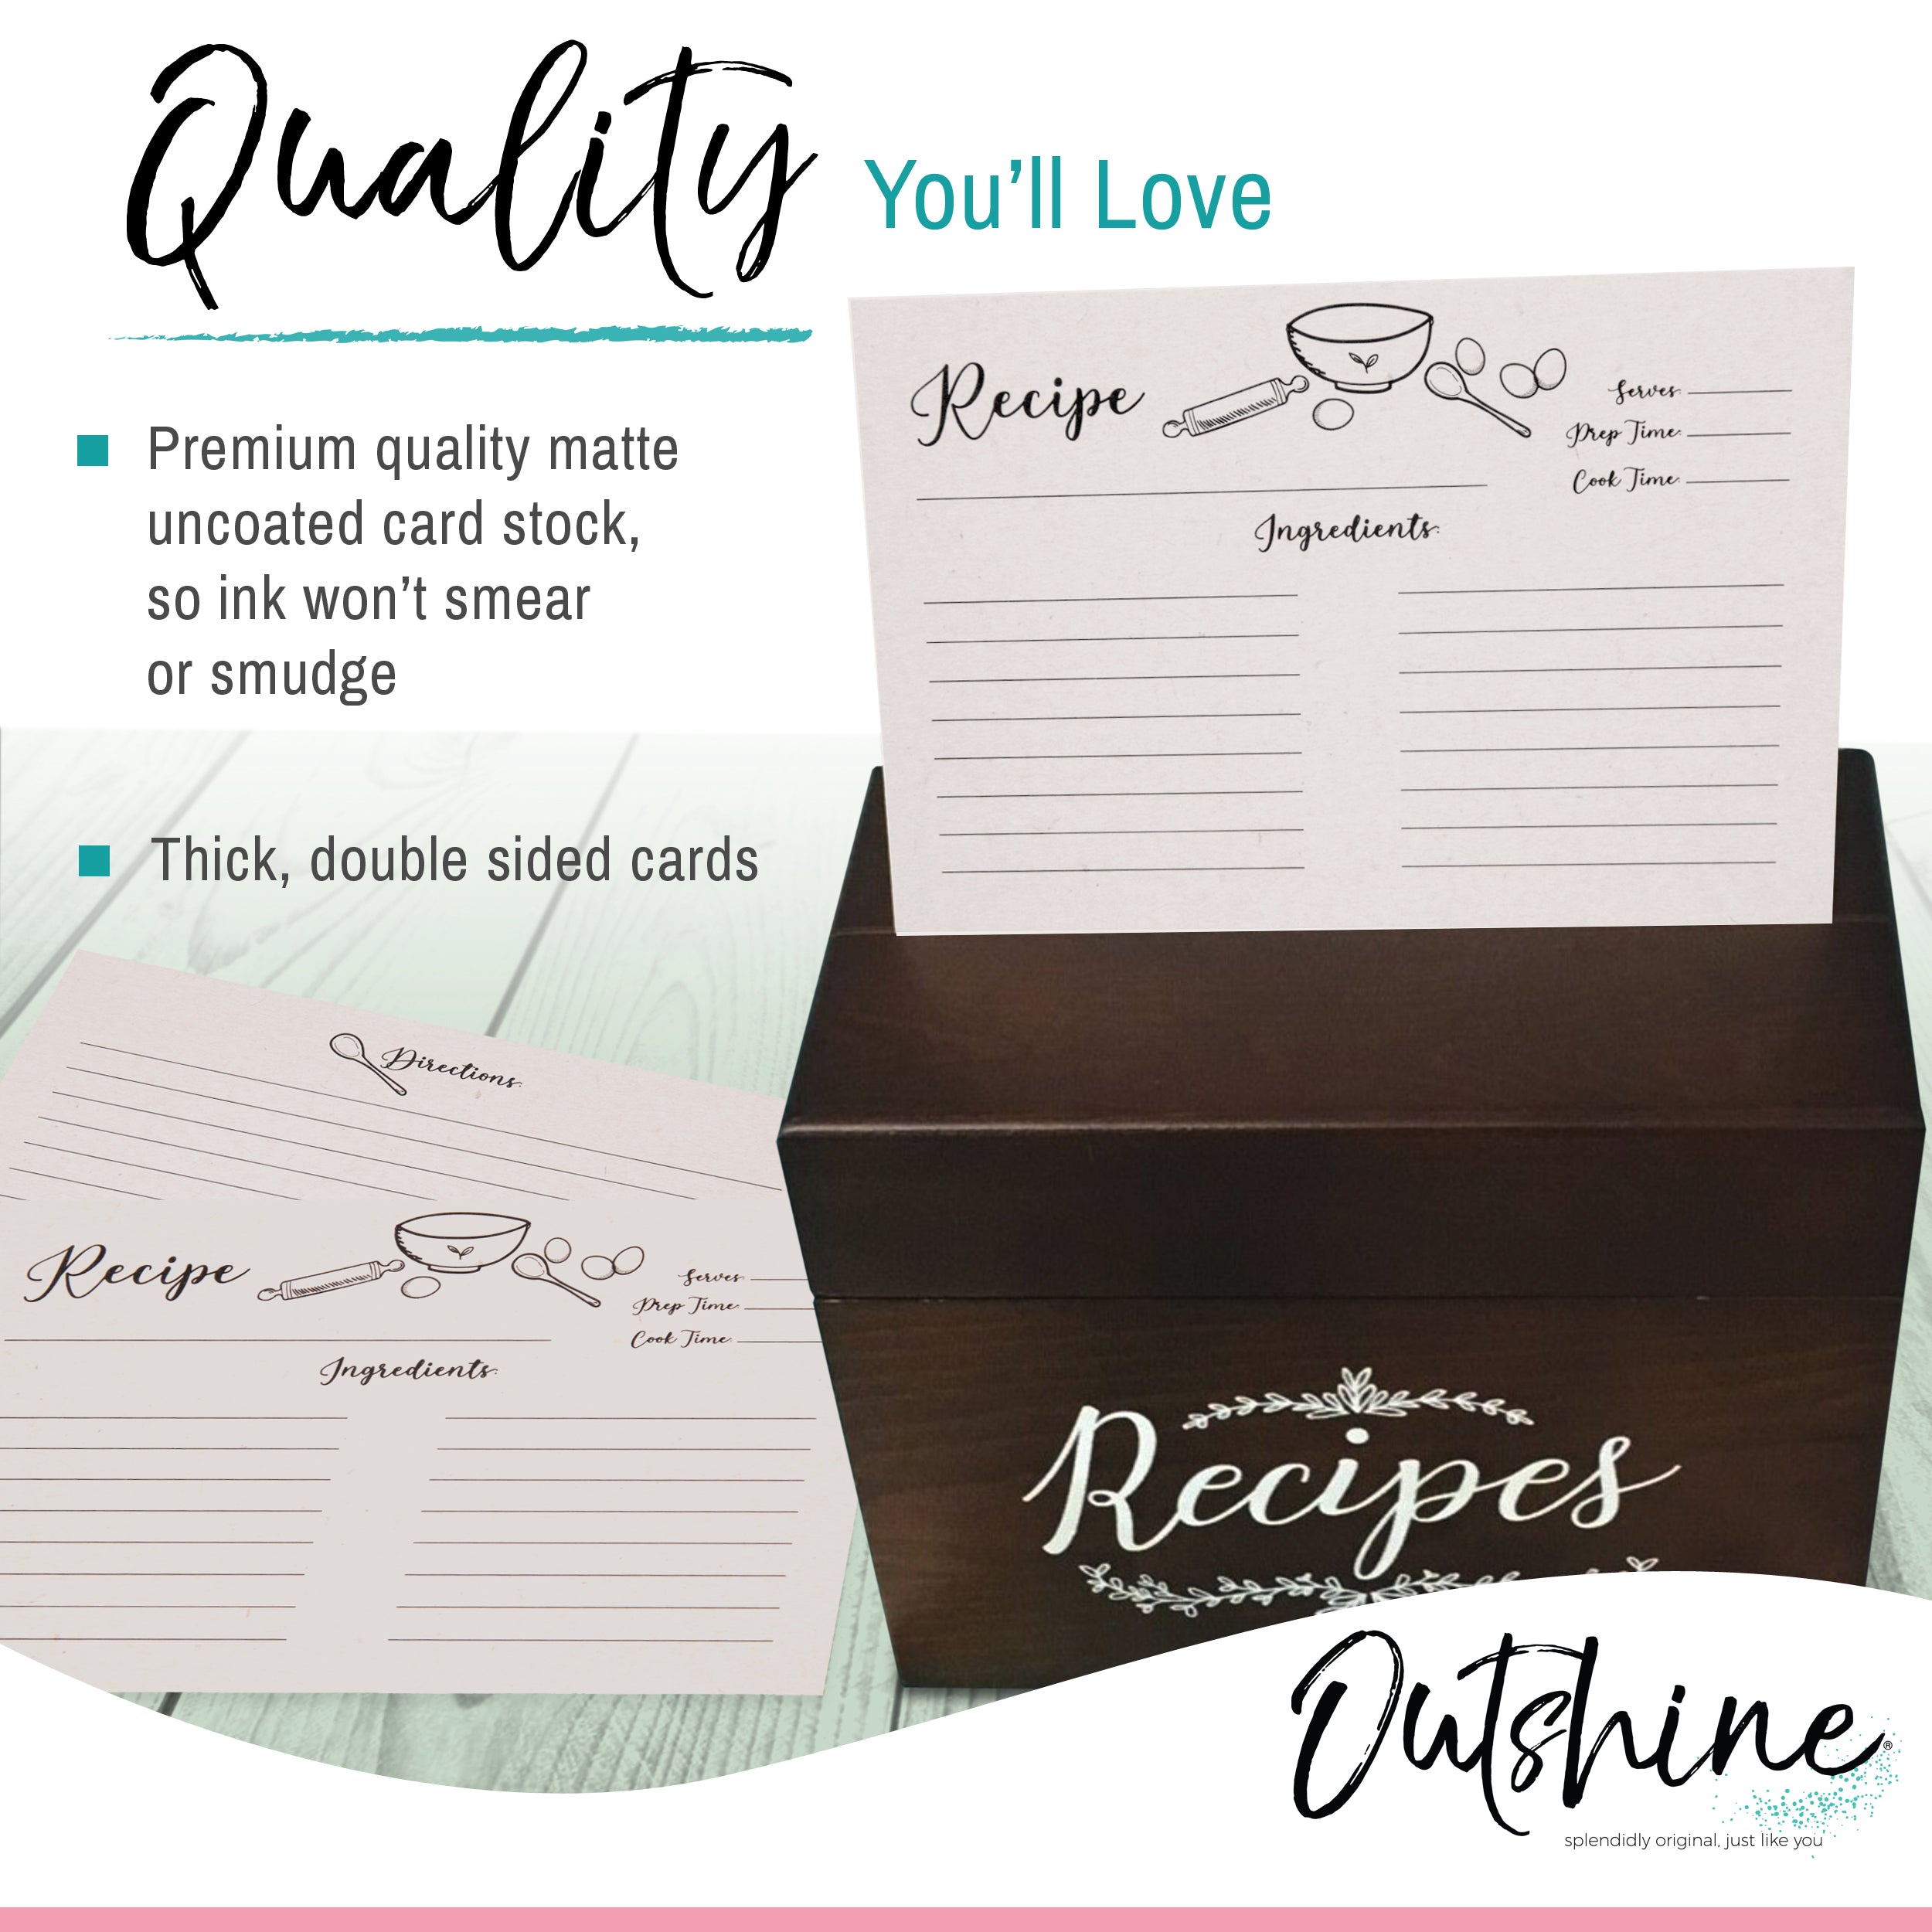 Outshine Co Premium Recipe Cards 4x6 Inches, Fruit Design (Set of 50)